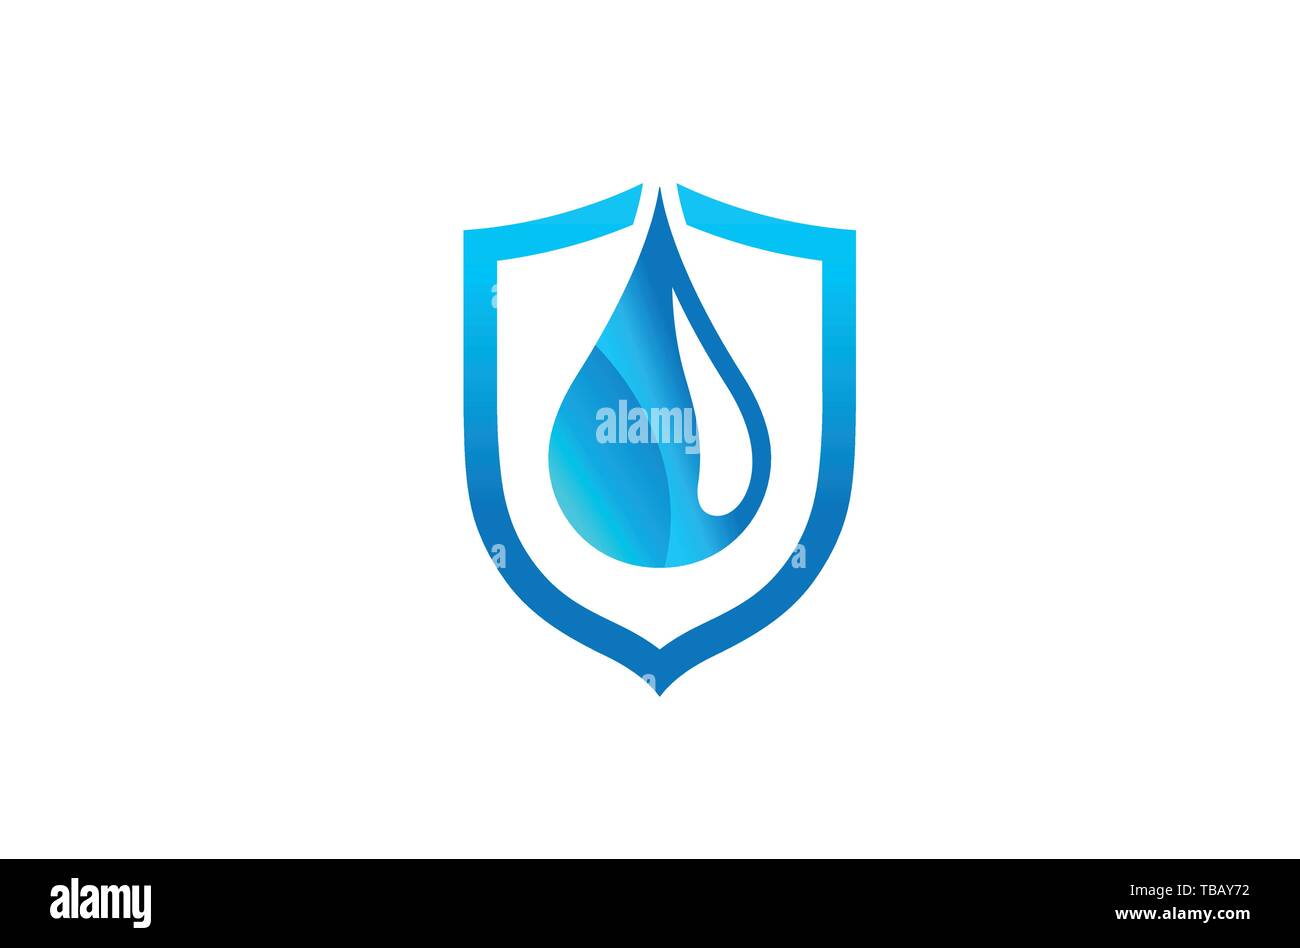 Kreative Abstrakt Blau Droplet Shield Logo Design Symbol Vektor Illustration Stock Vektor